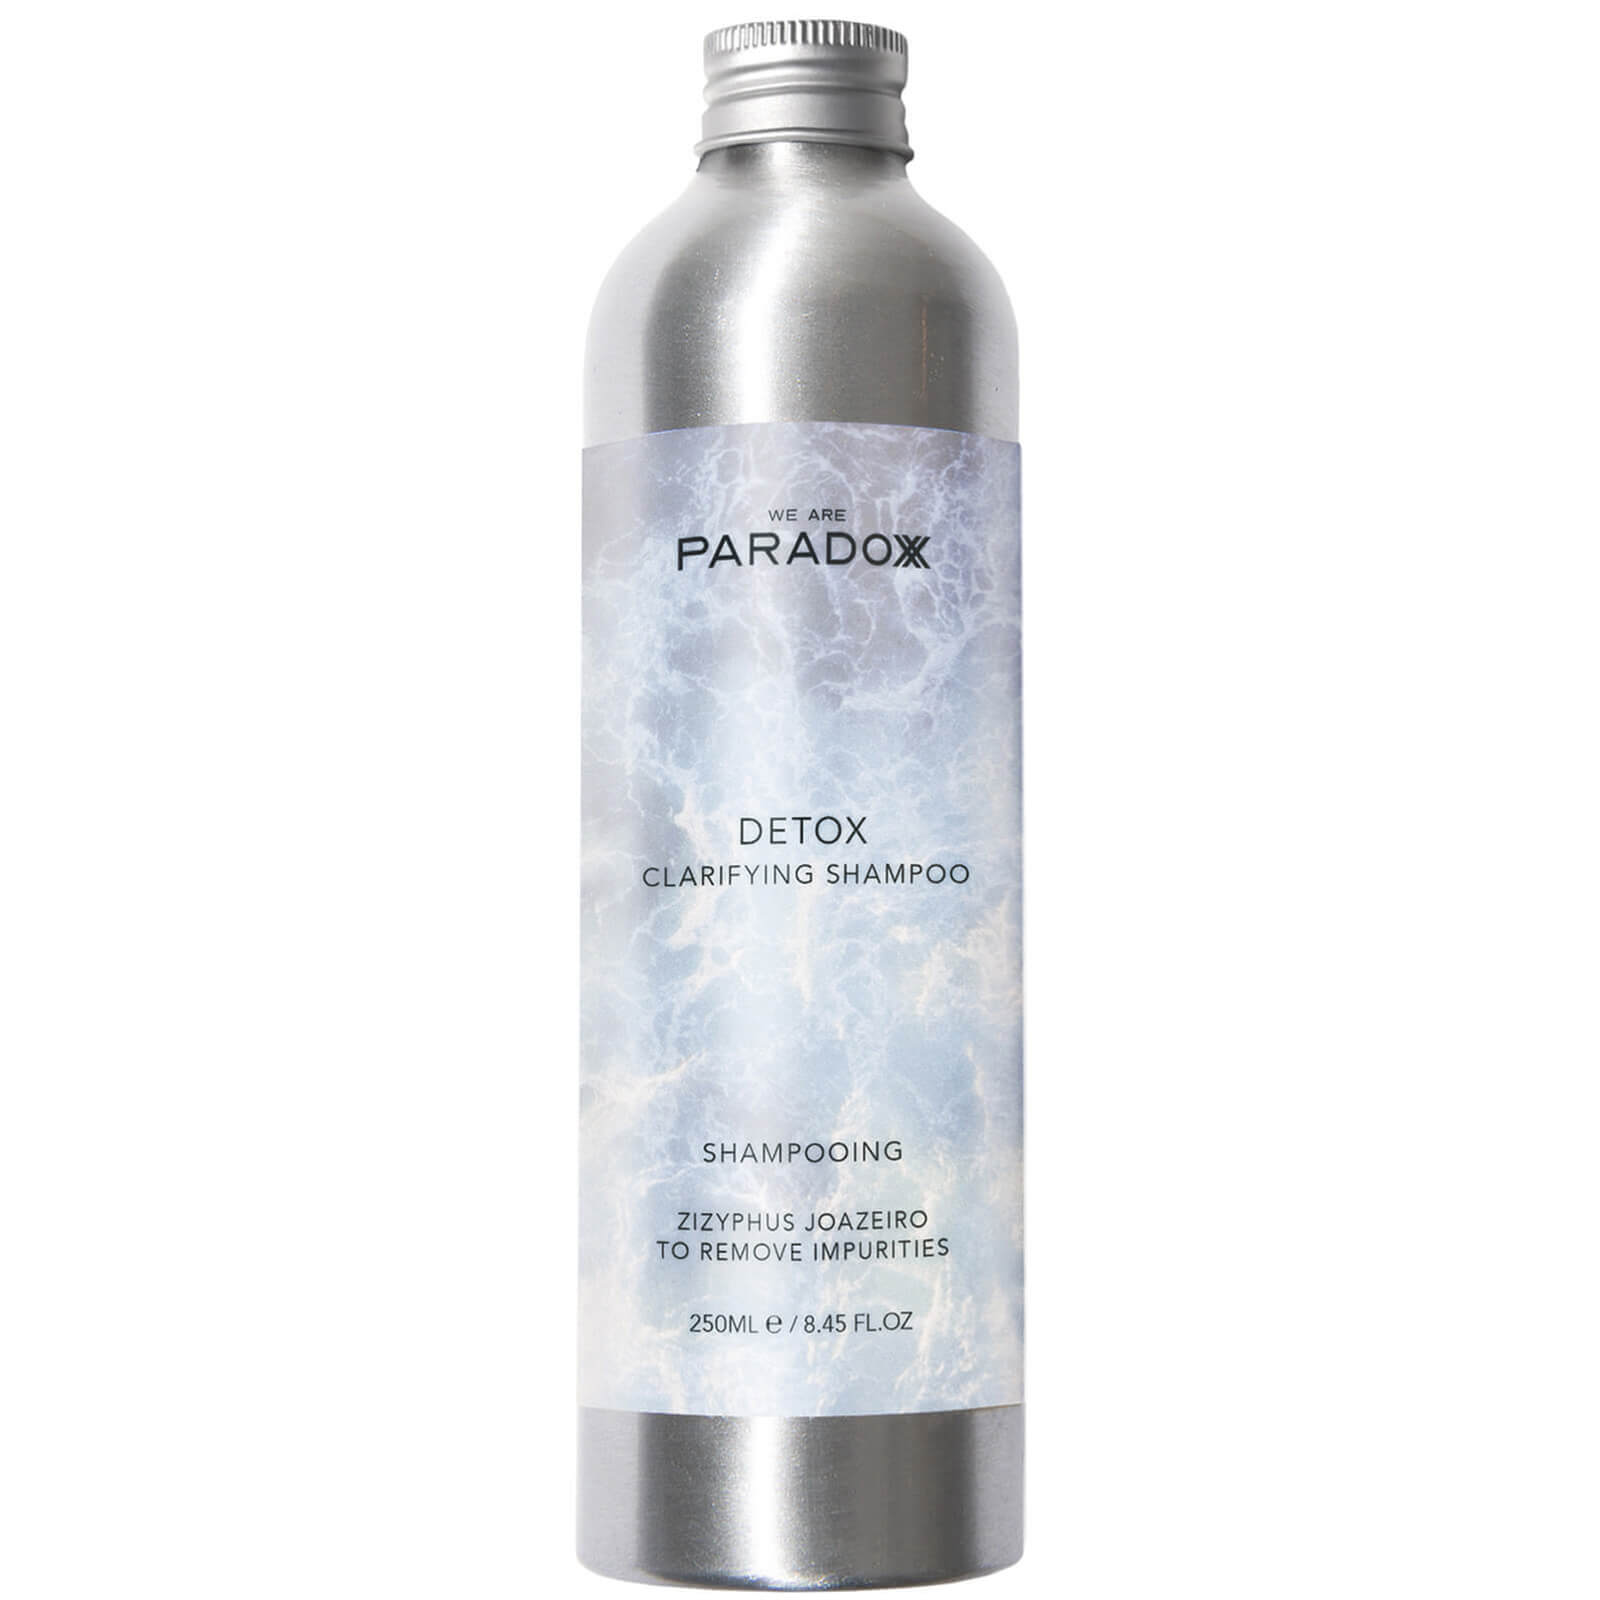 We Are Paradoxx Detox Clarifying Shampoo 250ml lookfantastic.com imagine